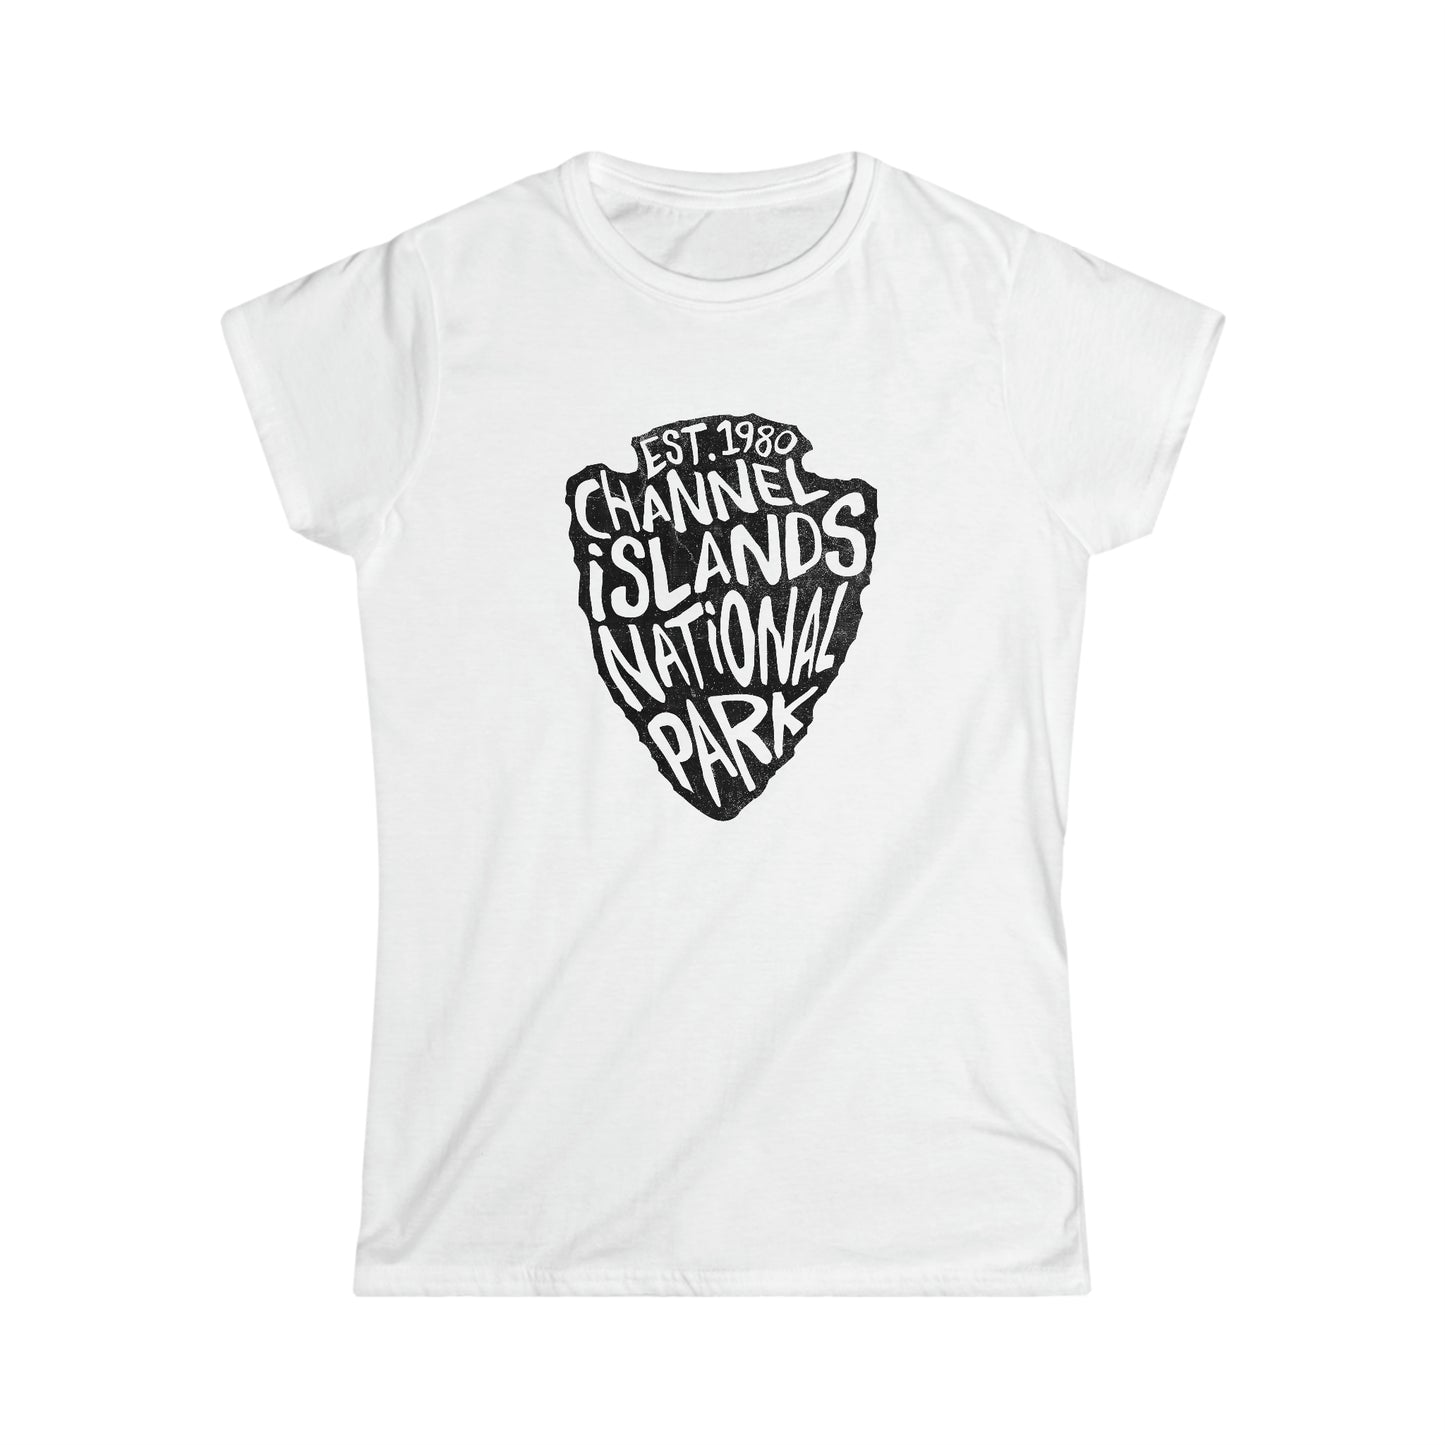 Channel Islands National Park Women's T-Shirt - Arrowhead Design